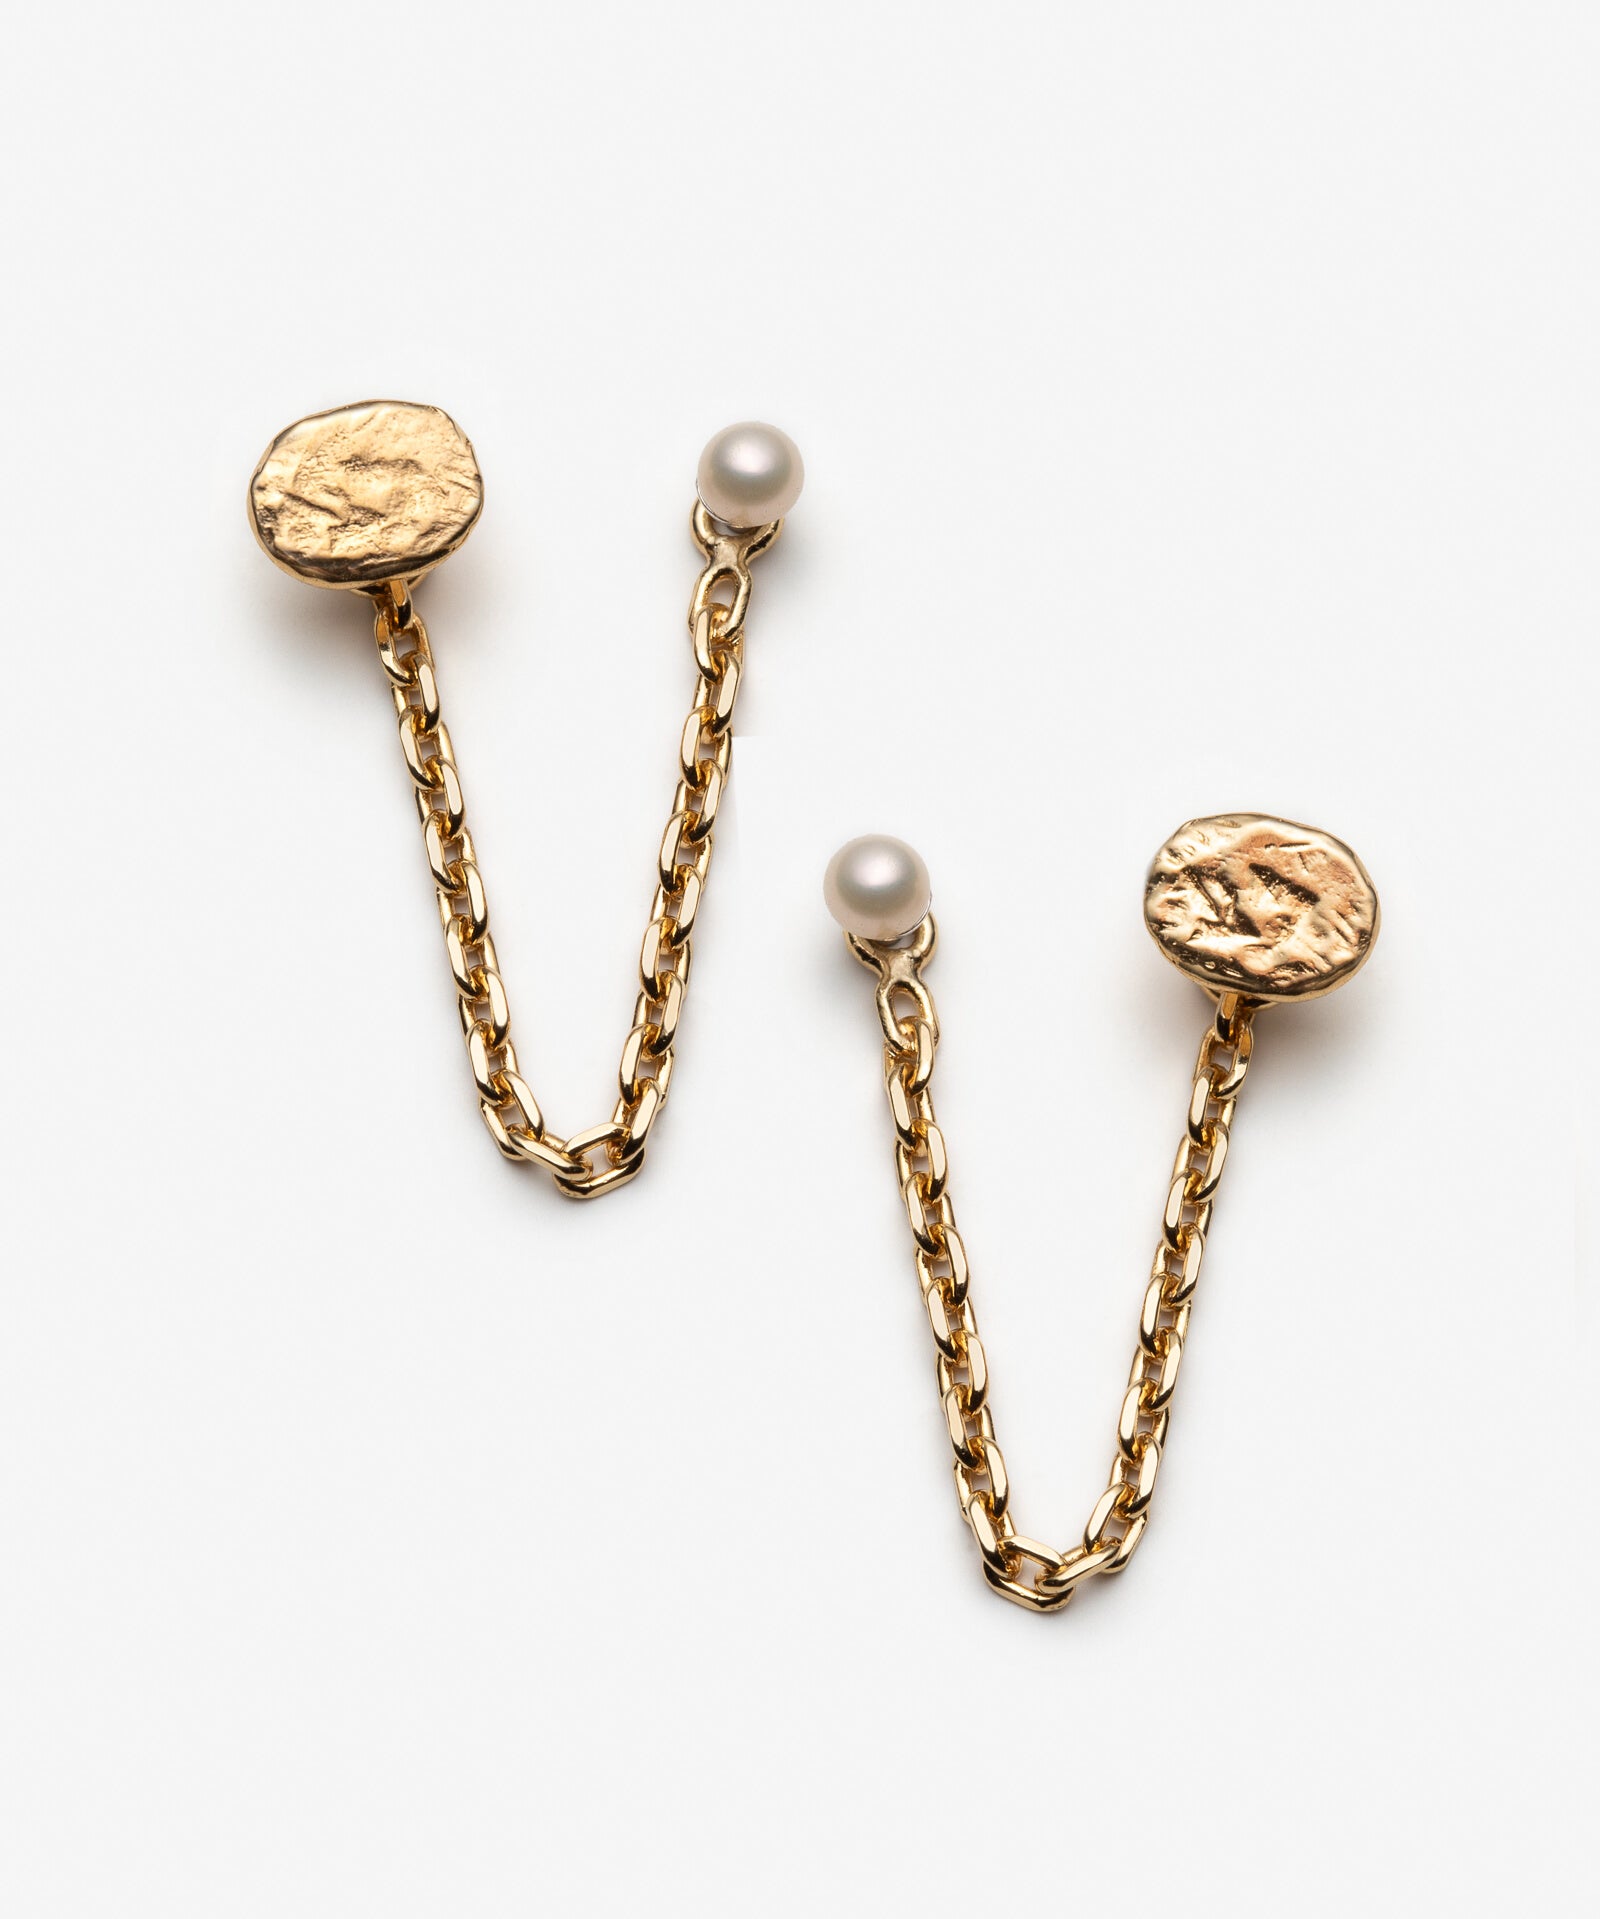 Élise - Double Earrings with a Chain